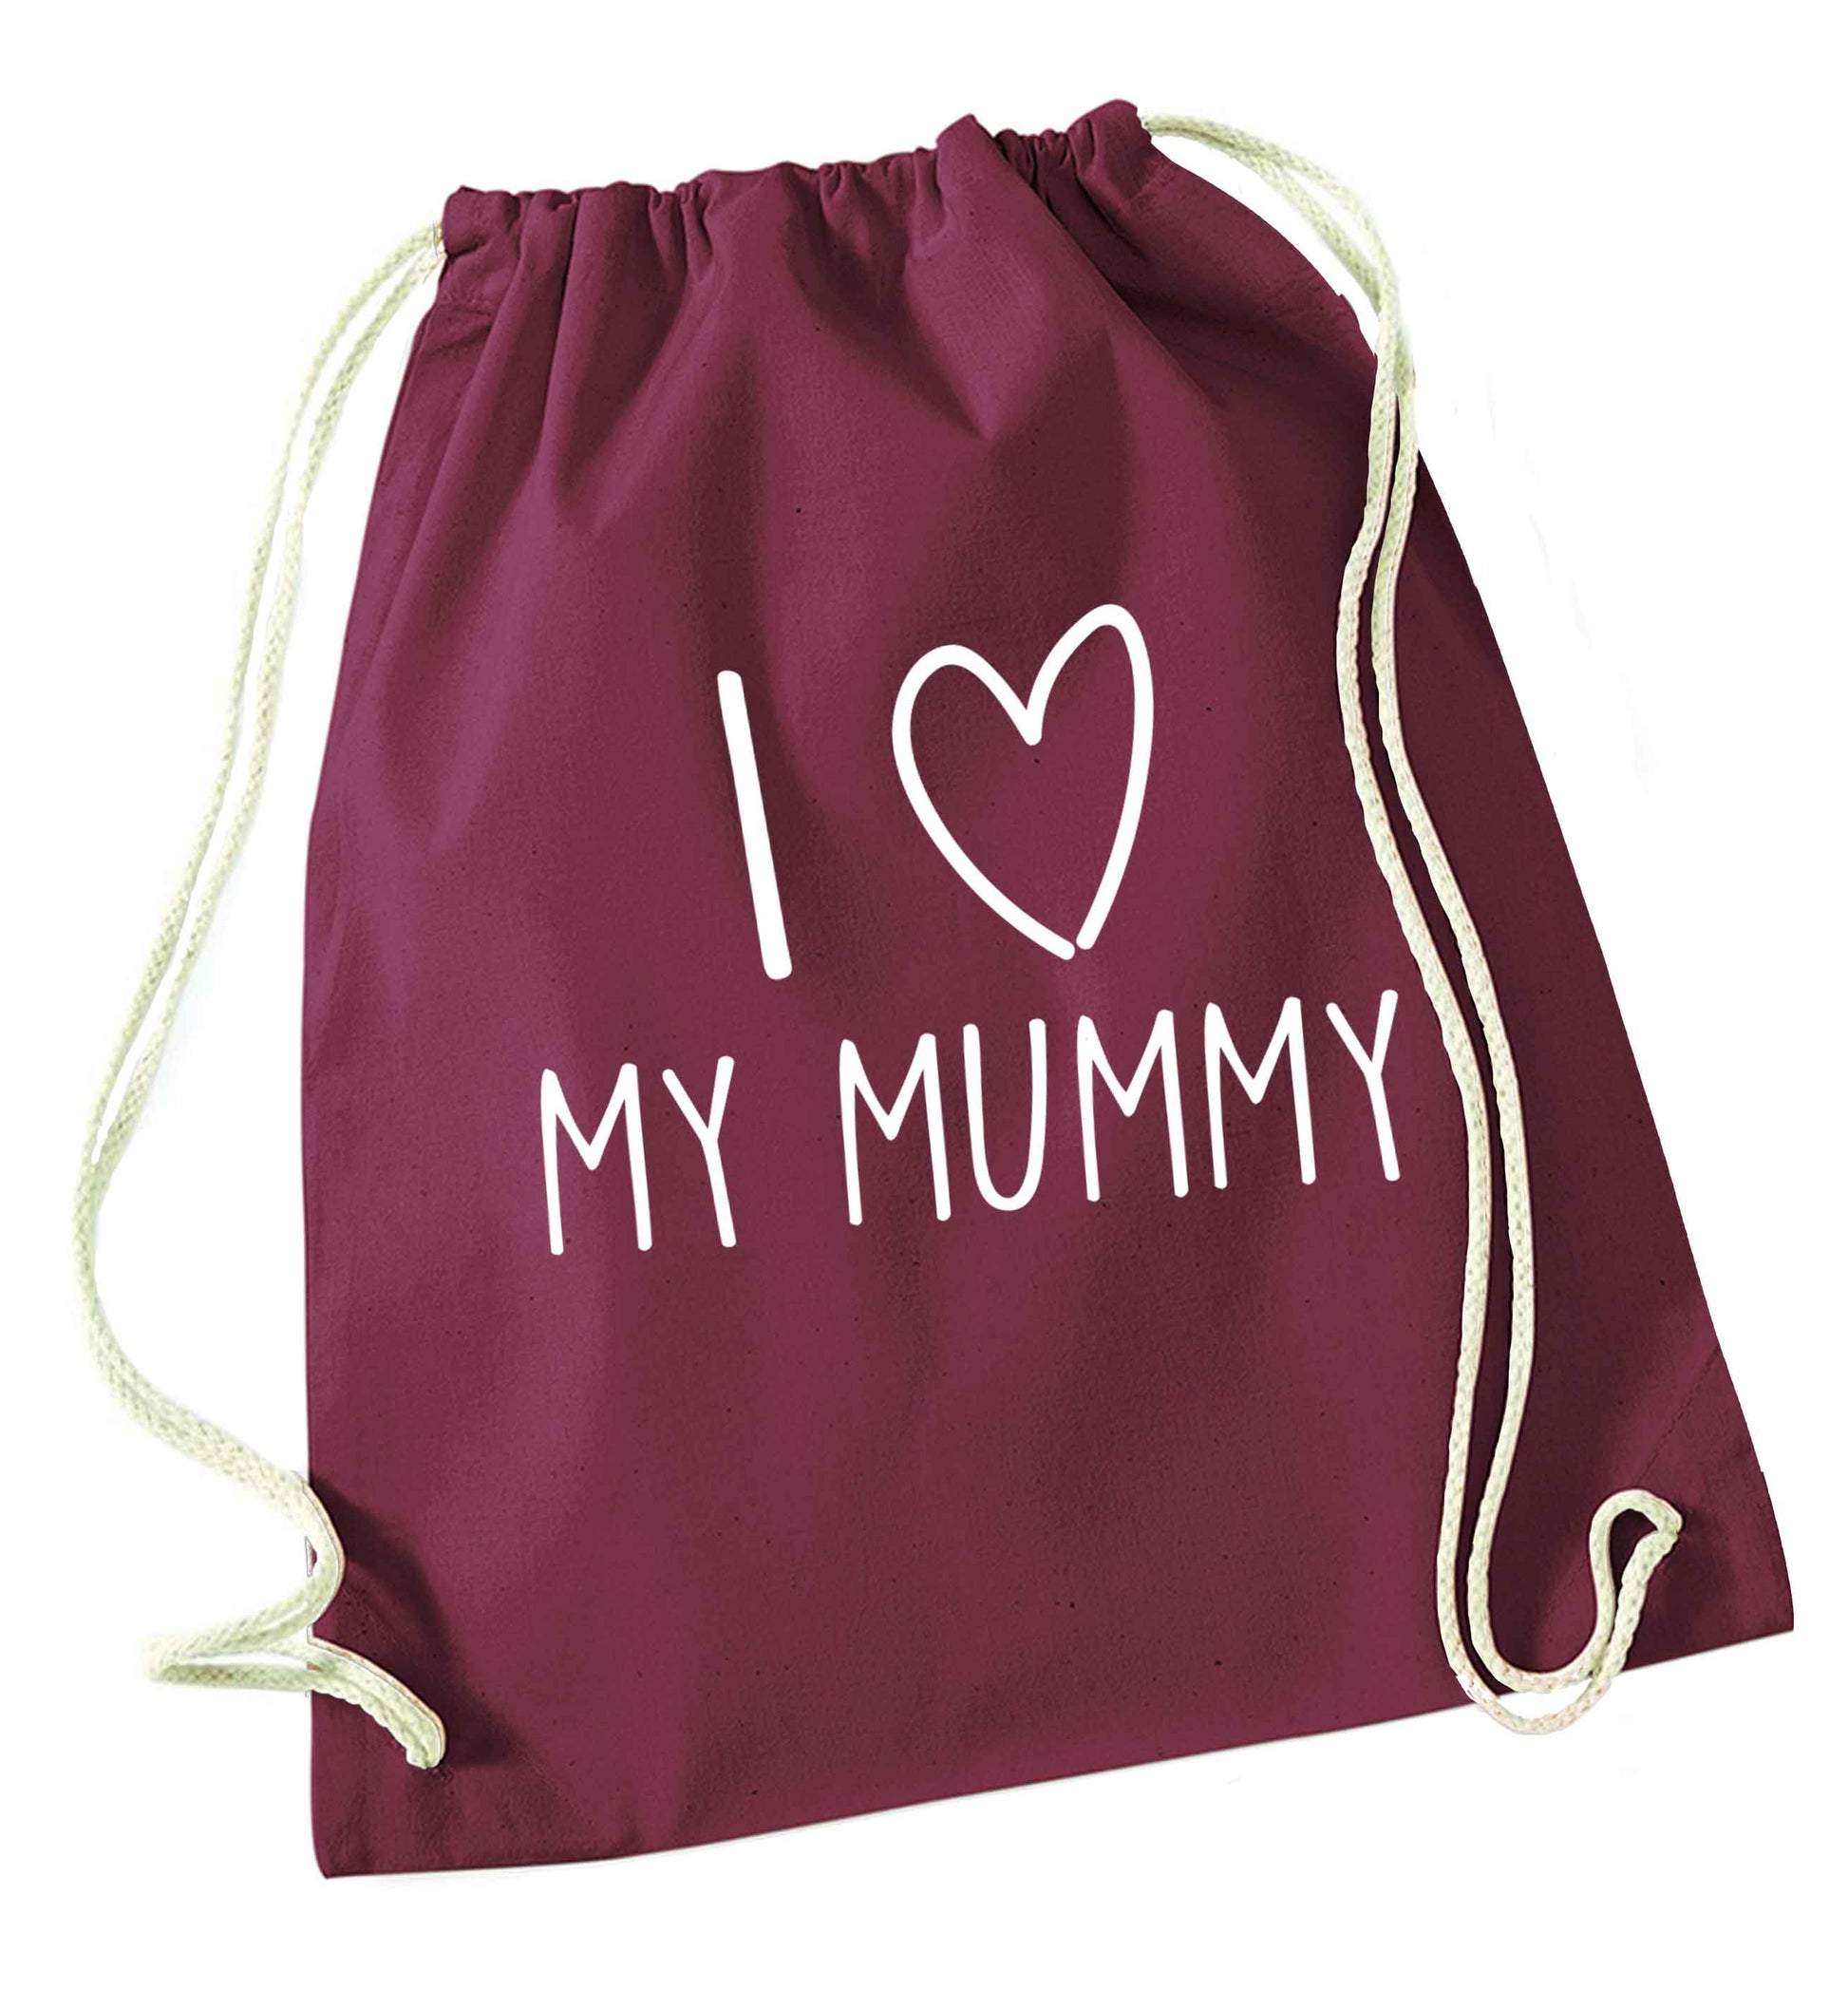 I love my mummy maroon drawstring bag